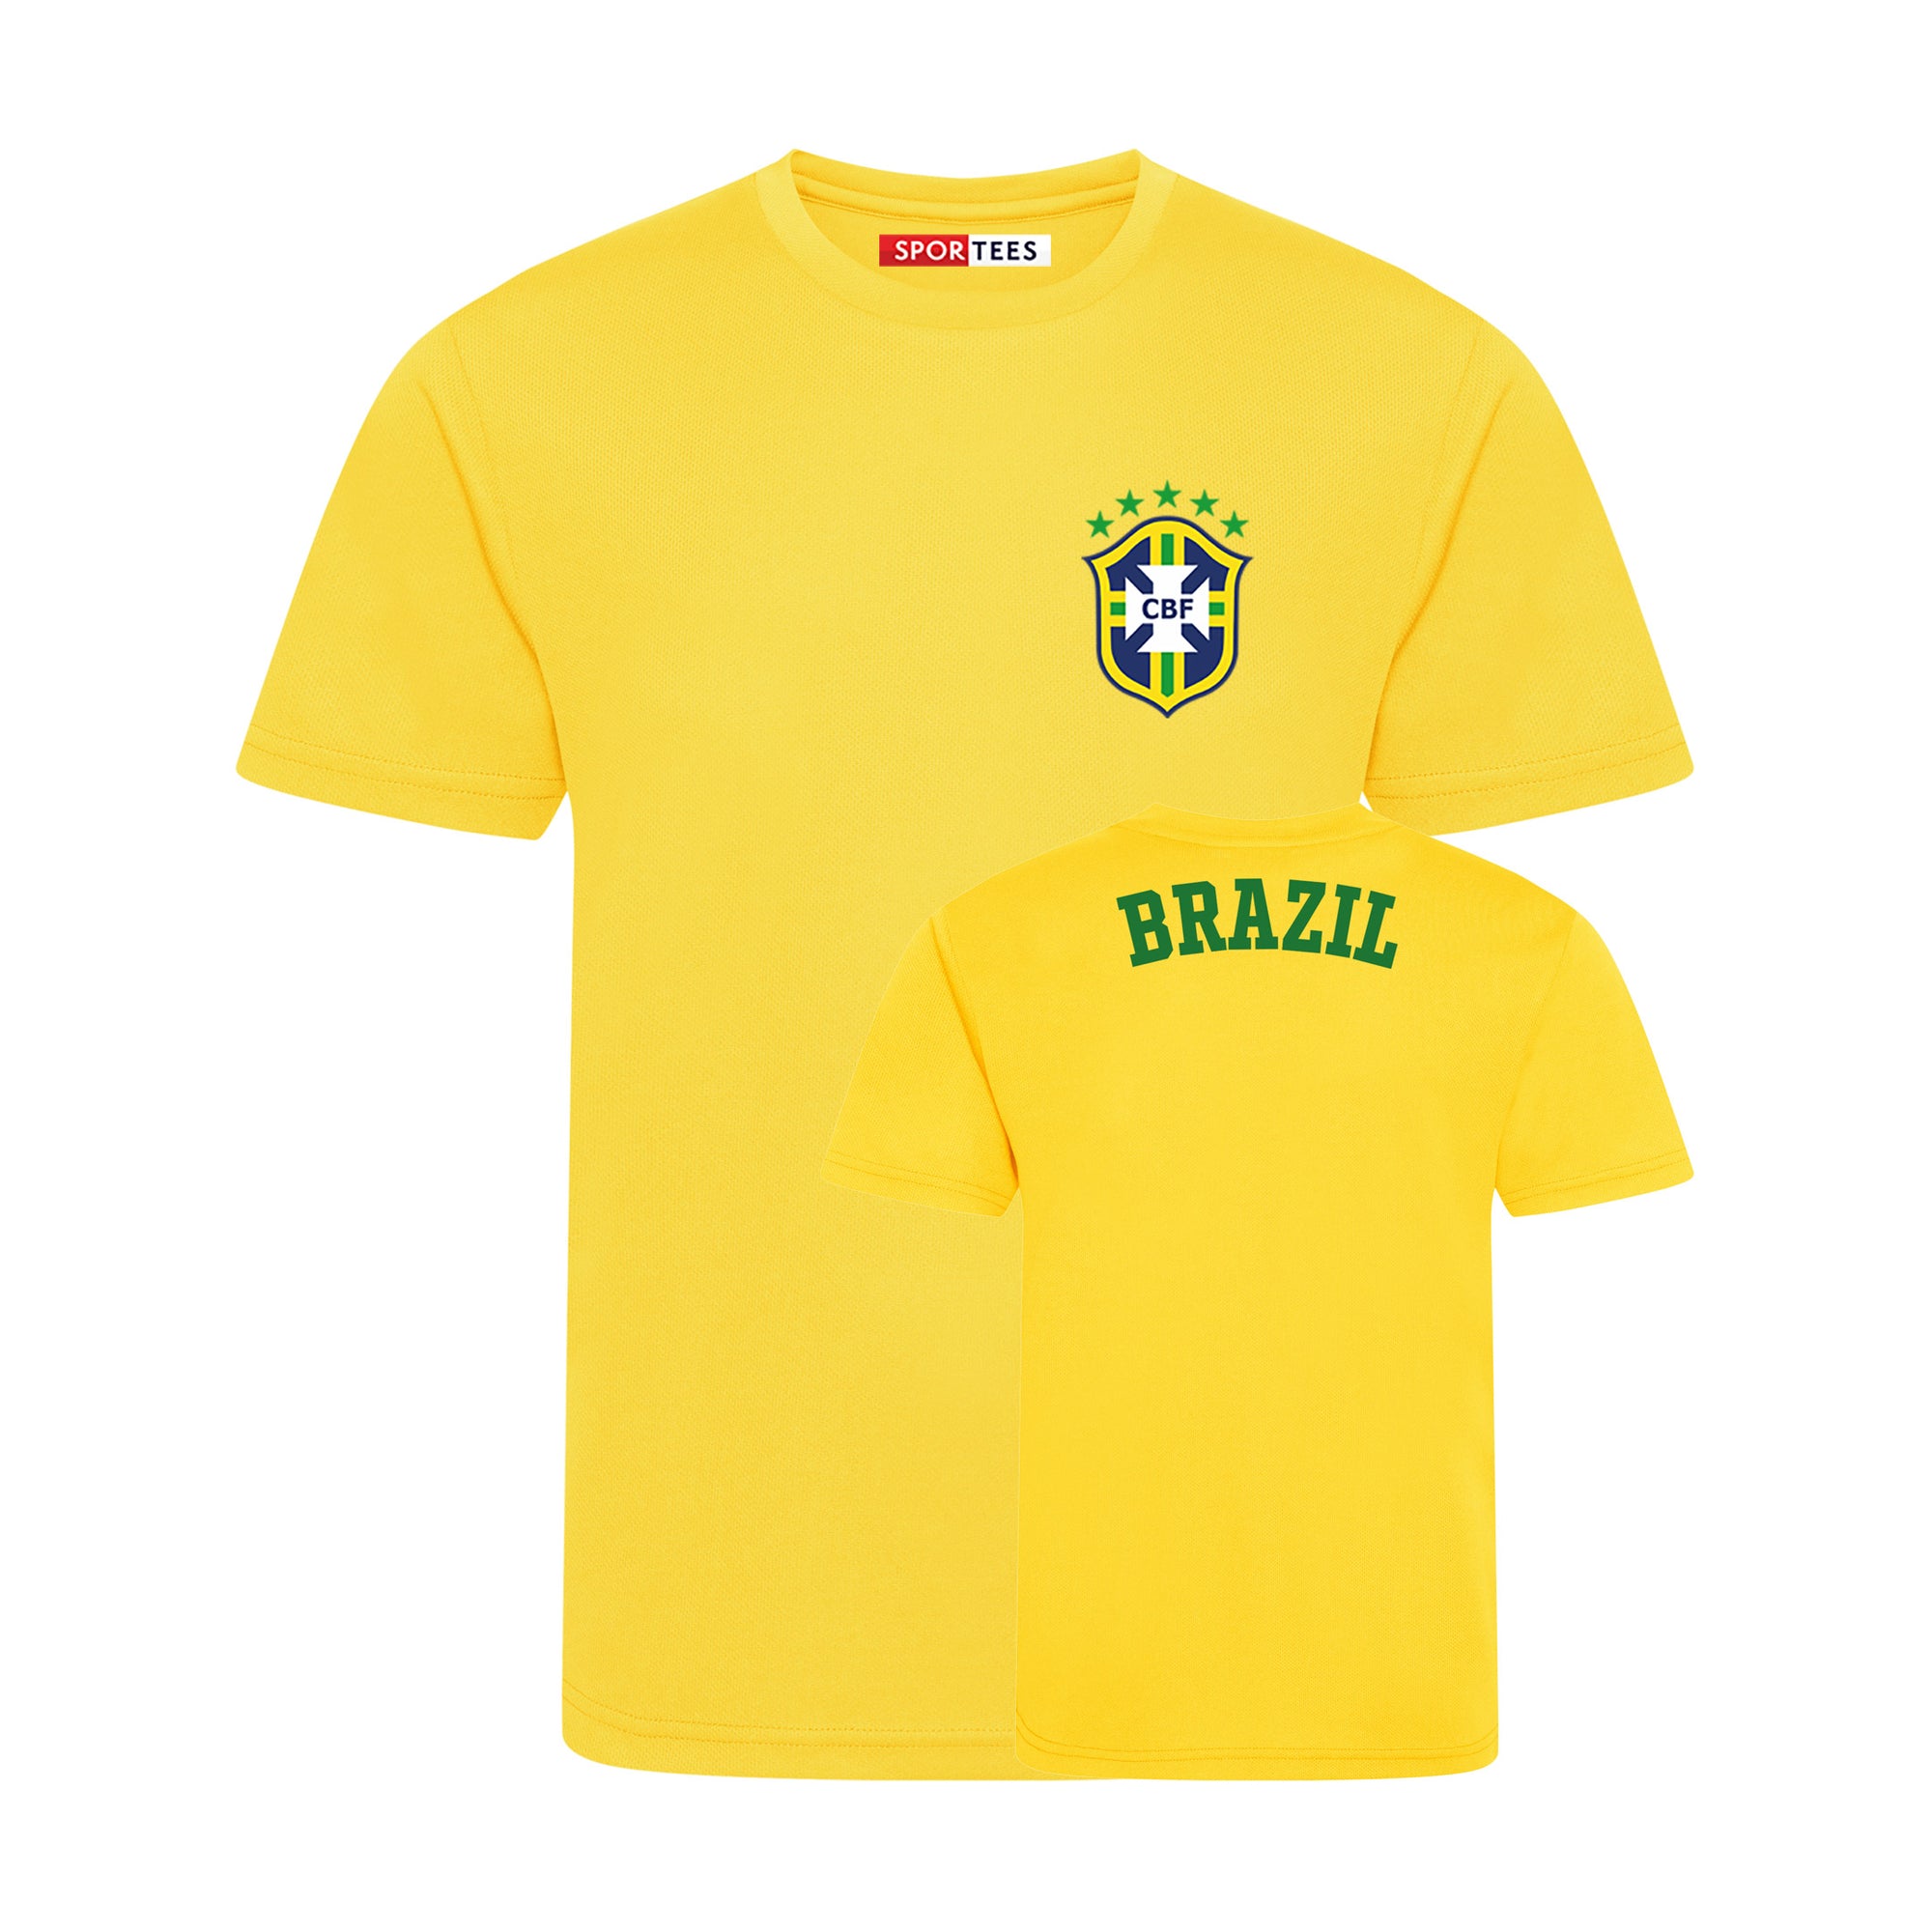 I Love Brazil T-Shirt - Unisex Kids and Adults